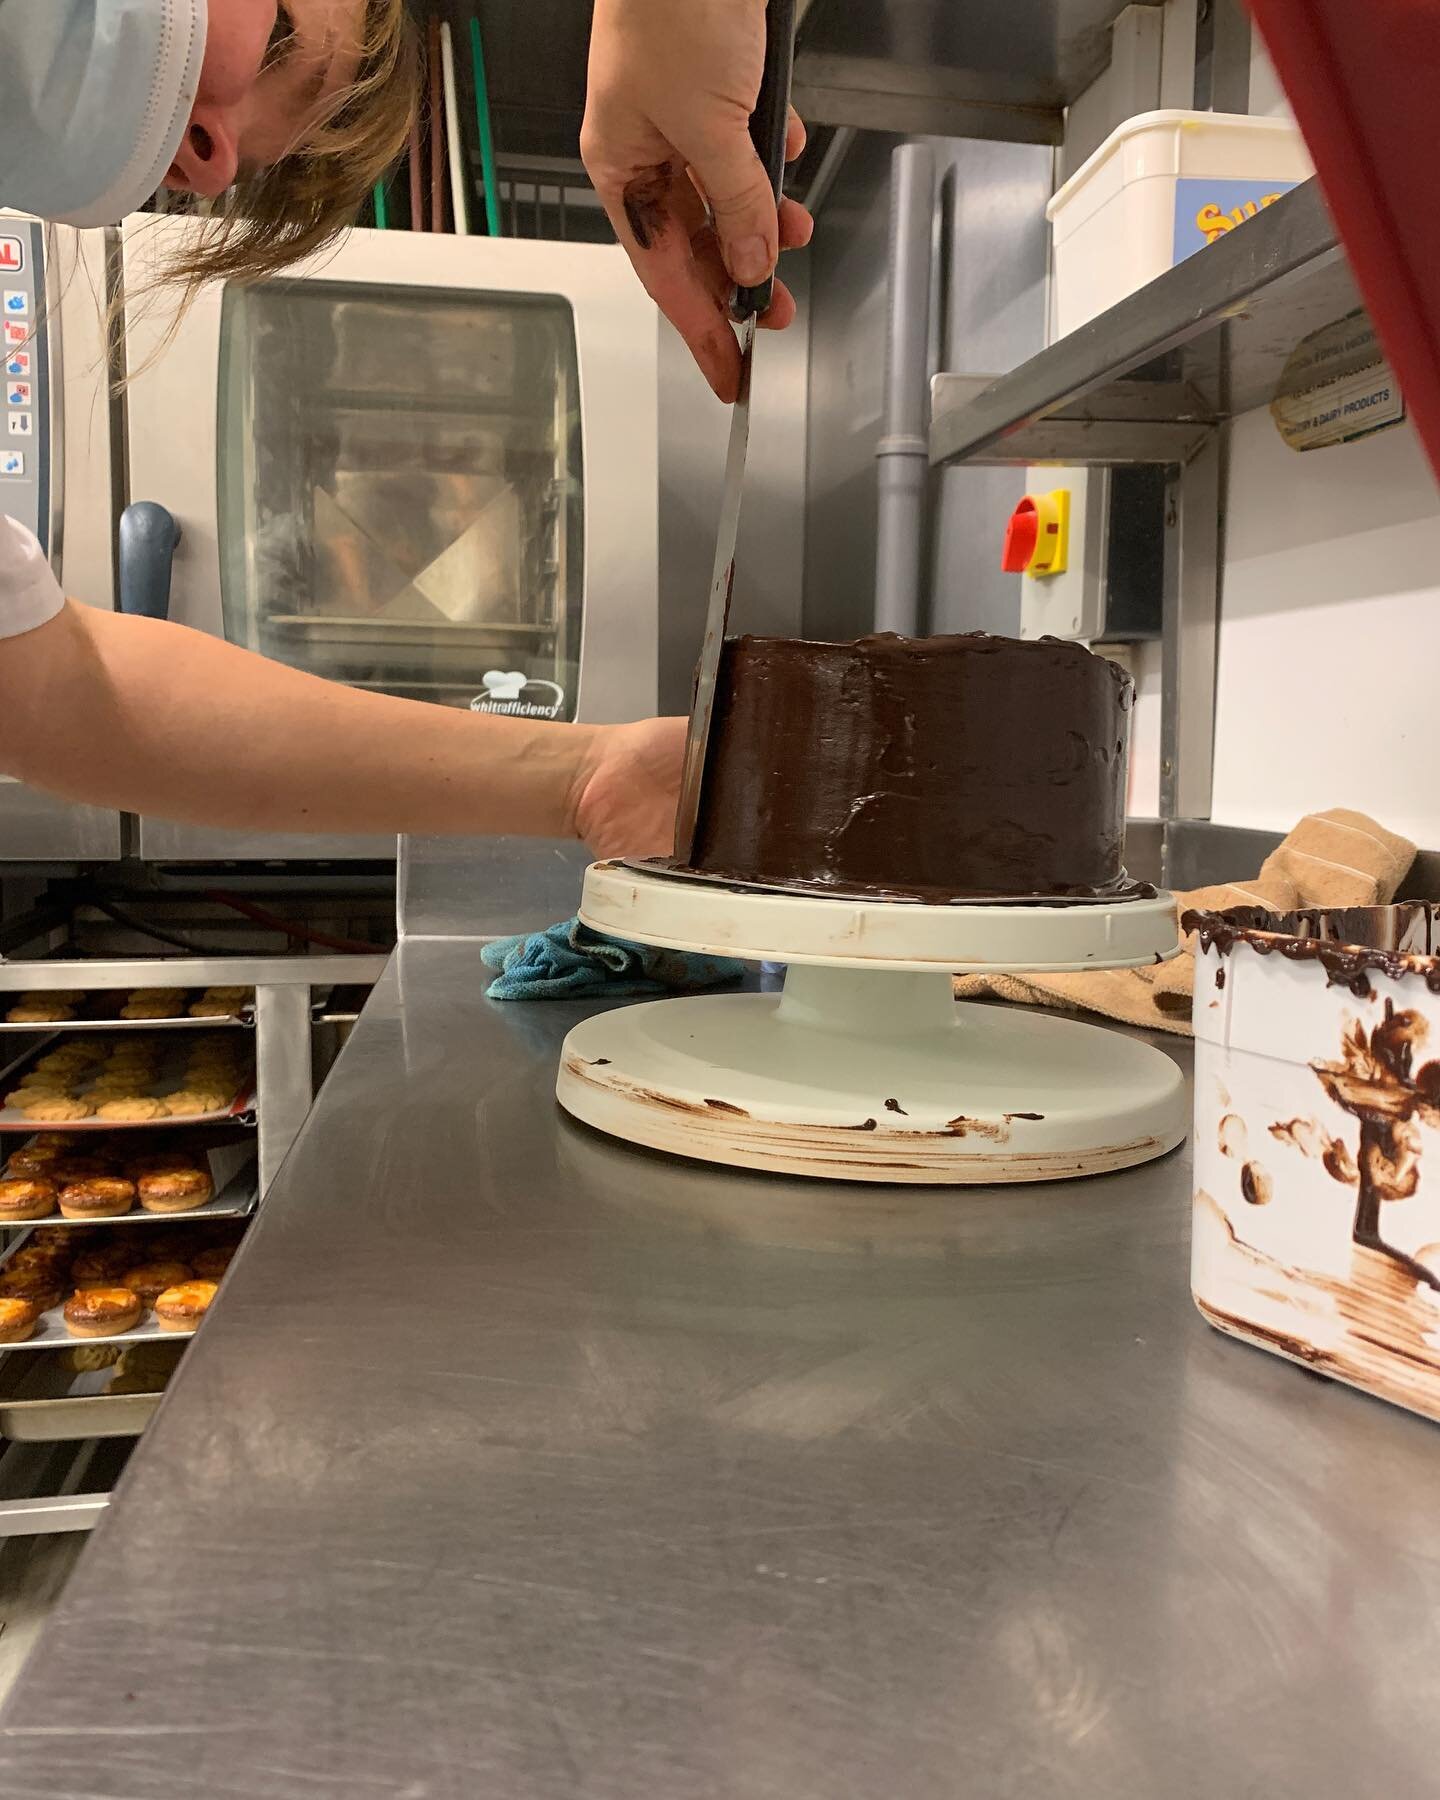 Olga busy icing our chocolate cakes 
#behindthescenes #chocolatecake #icing #bakery #thegranary #eastcorkfood